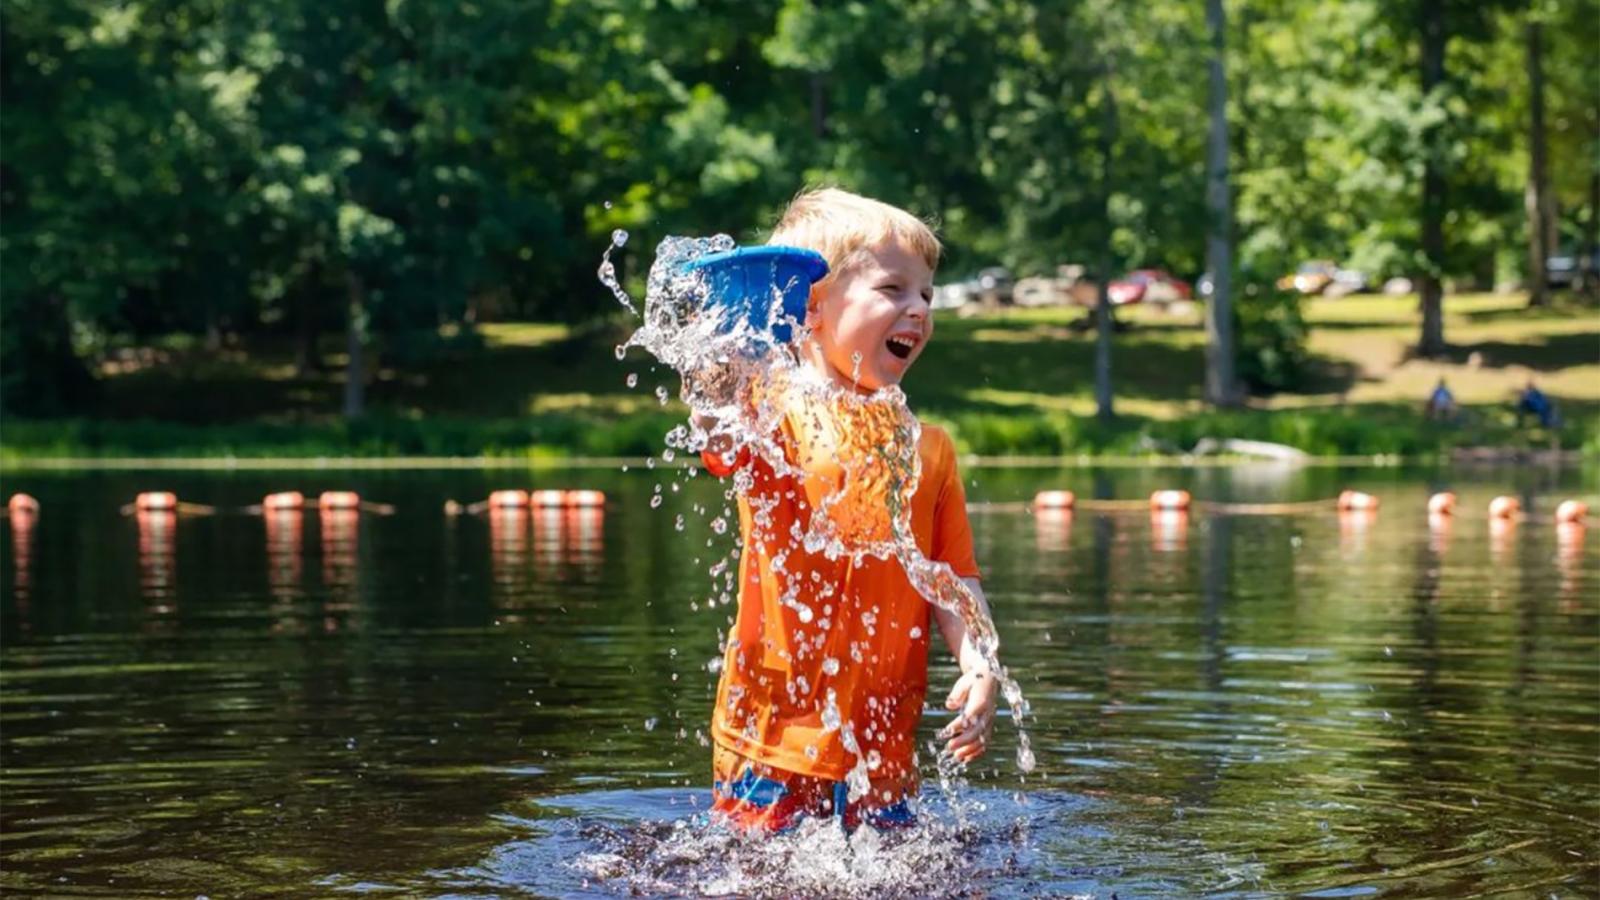 A boy splashing playfully in the water (Instagram@rachela.higgins)